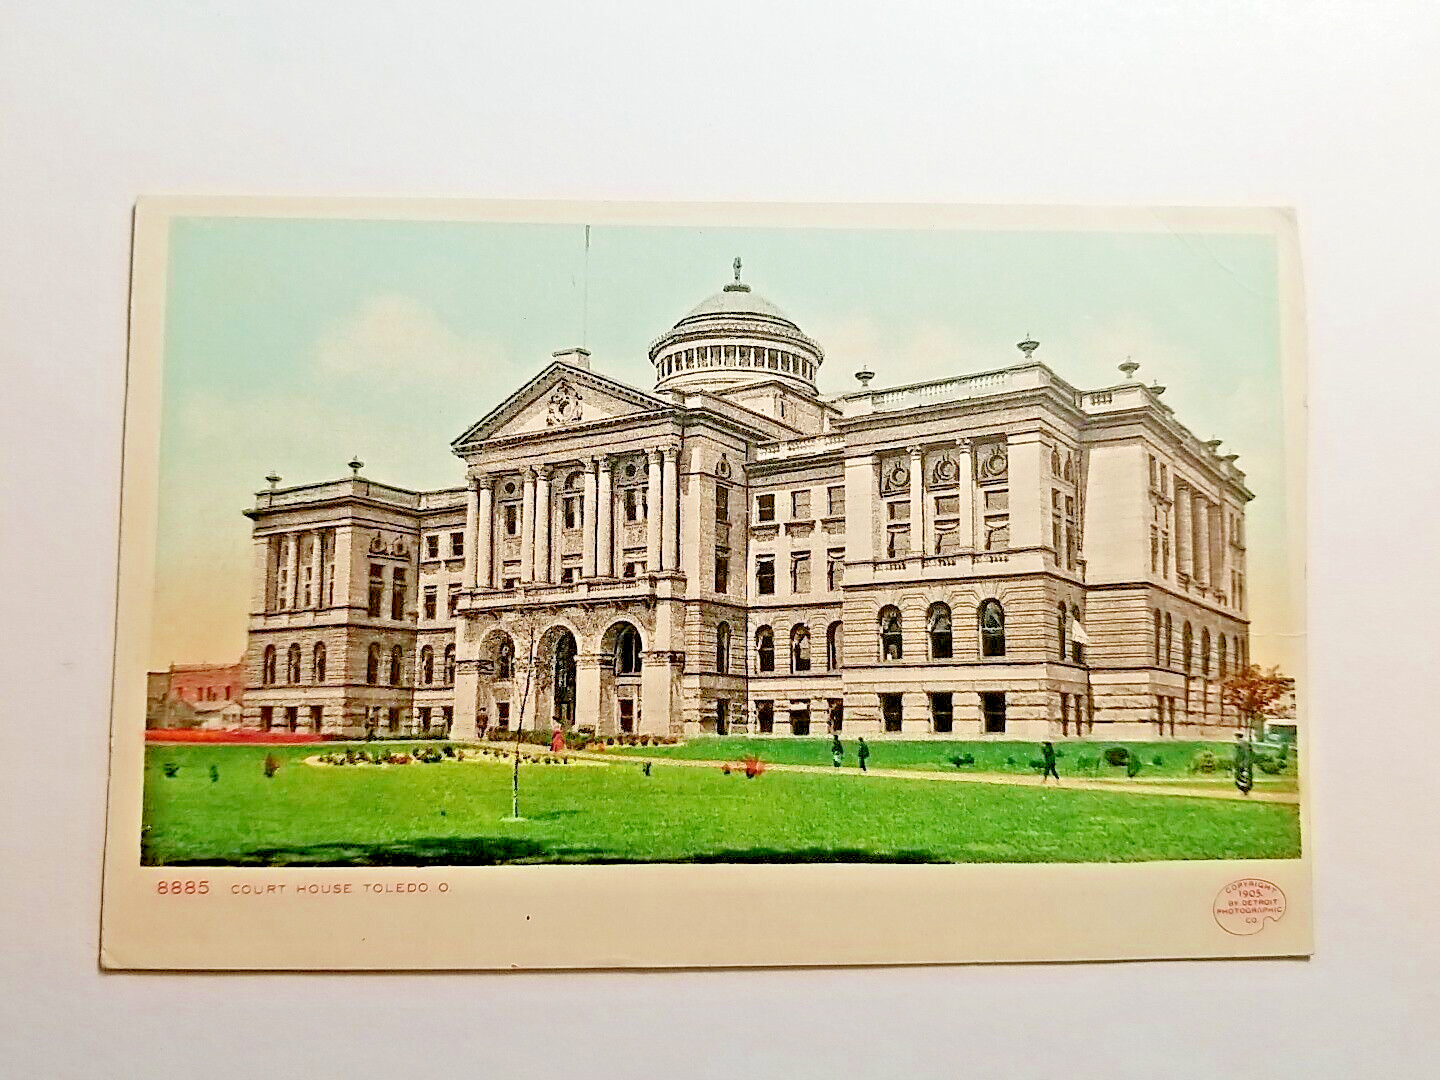 Antique Postcard 8885 Court House, Toledo Ohio 1905 (A10)